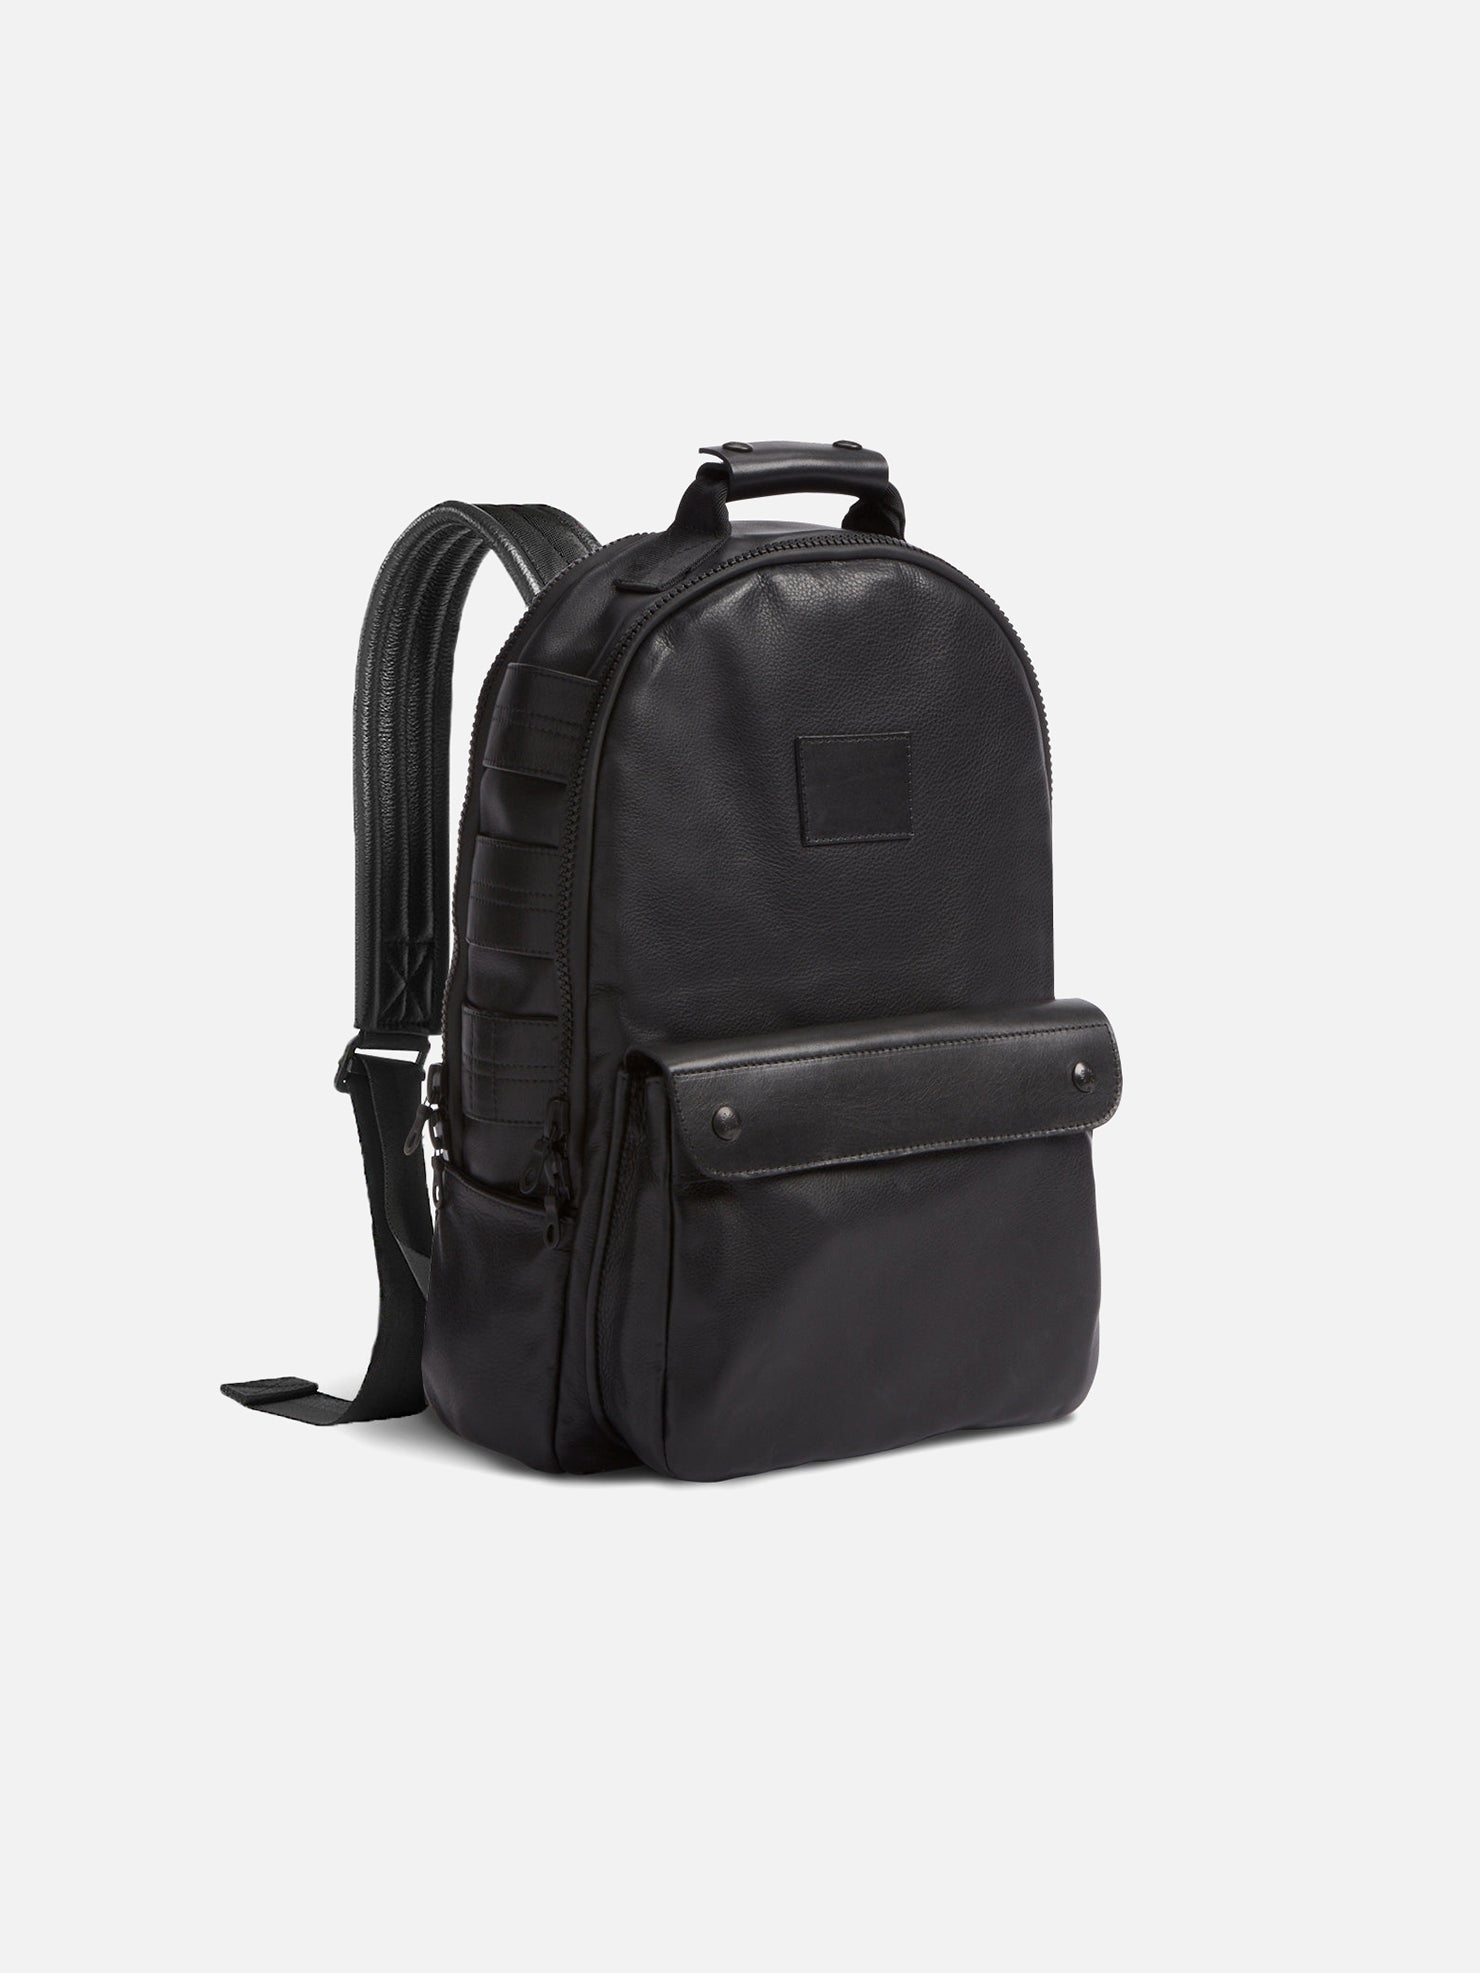 72-Hour Backpack in Black | Cole Haan